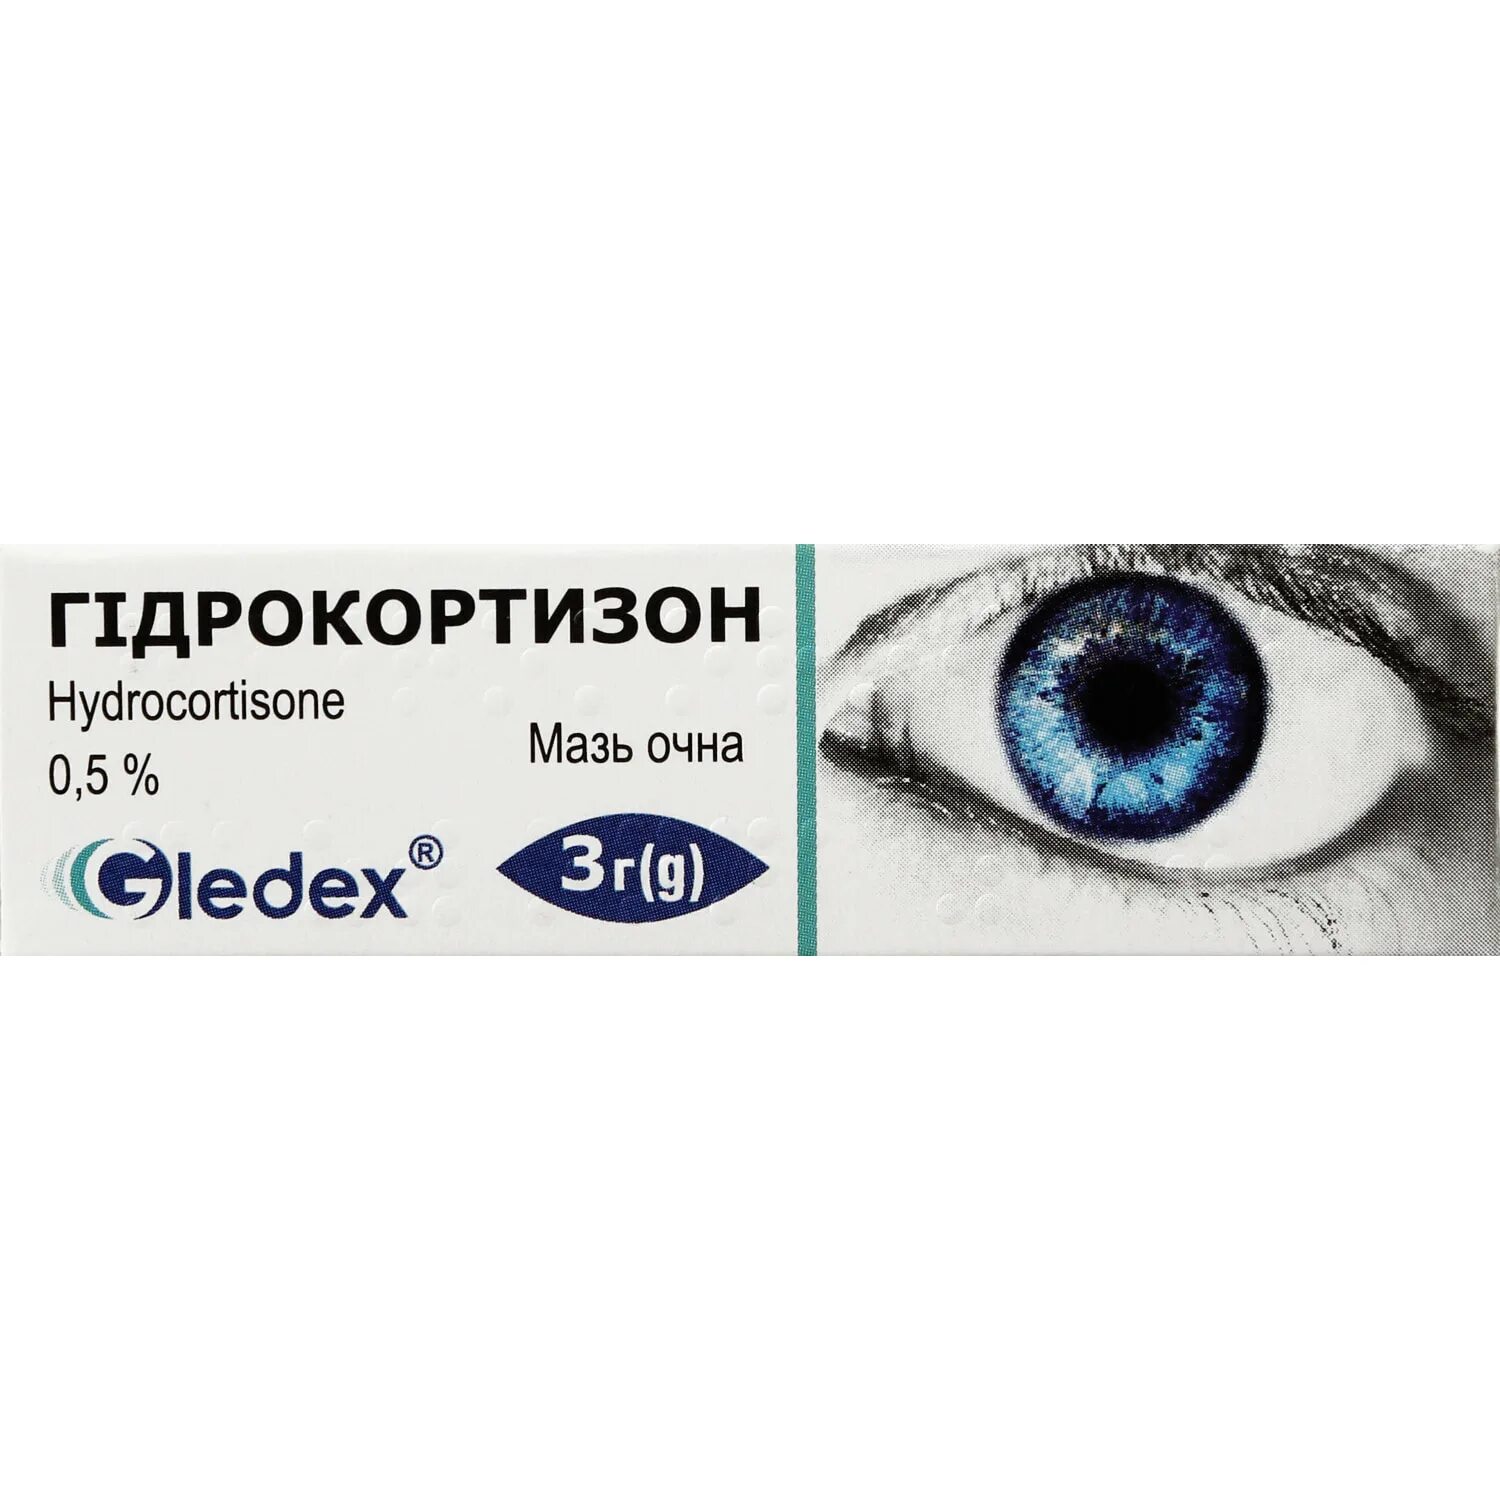 Виды глазных мазей. Глазная мазь. Гормональная мазь для глаз. Мазь для глаз гидрокортизон. Гидрокортизон мазь глазн 0,5% туб 3г.